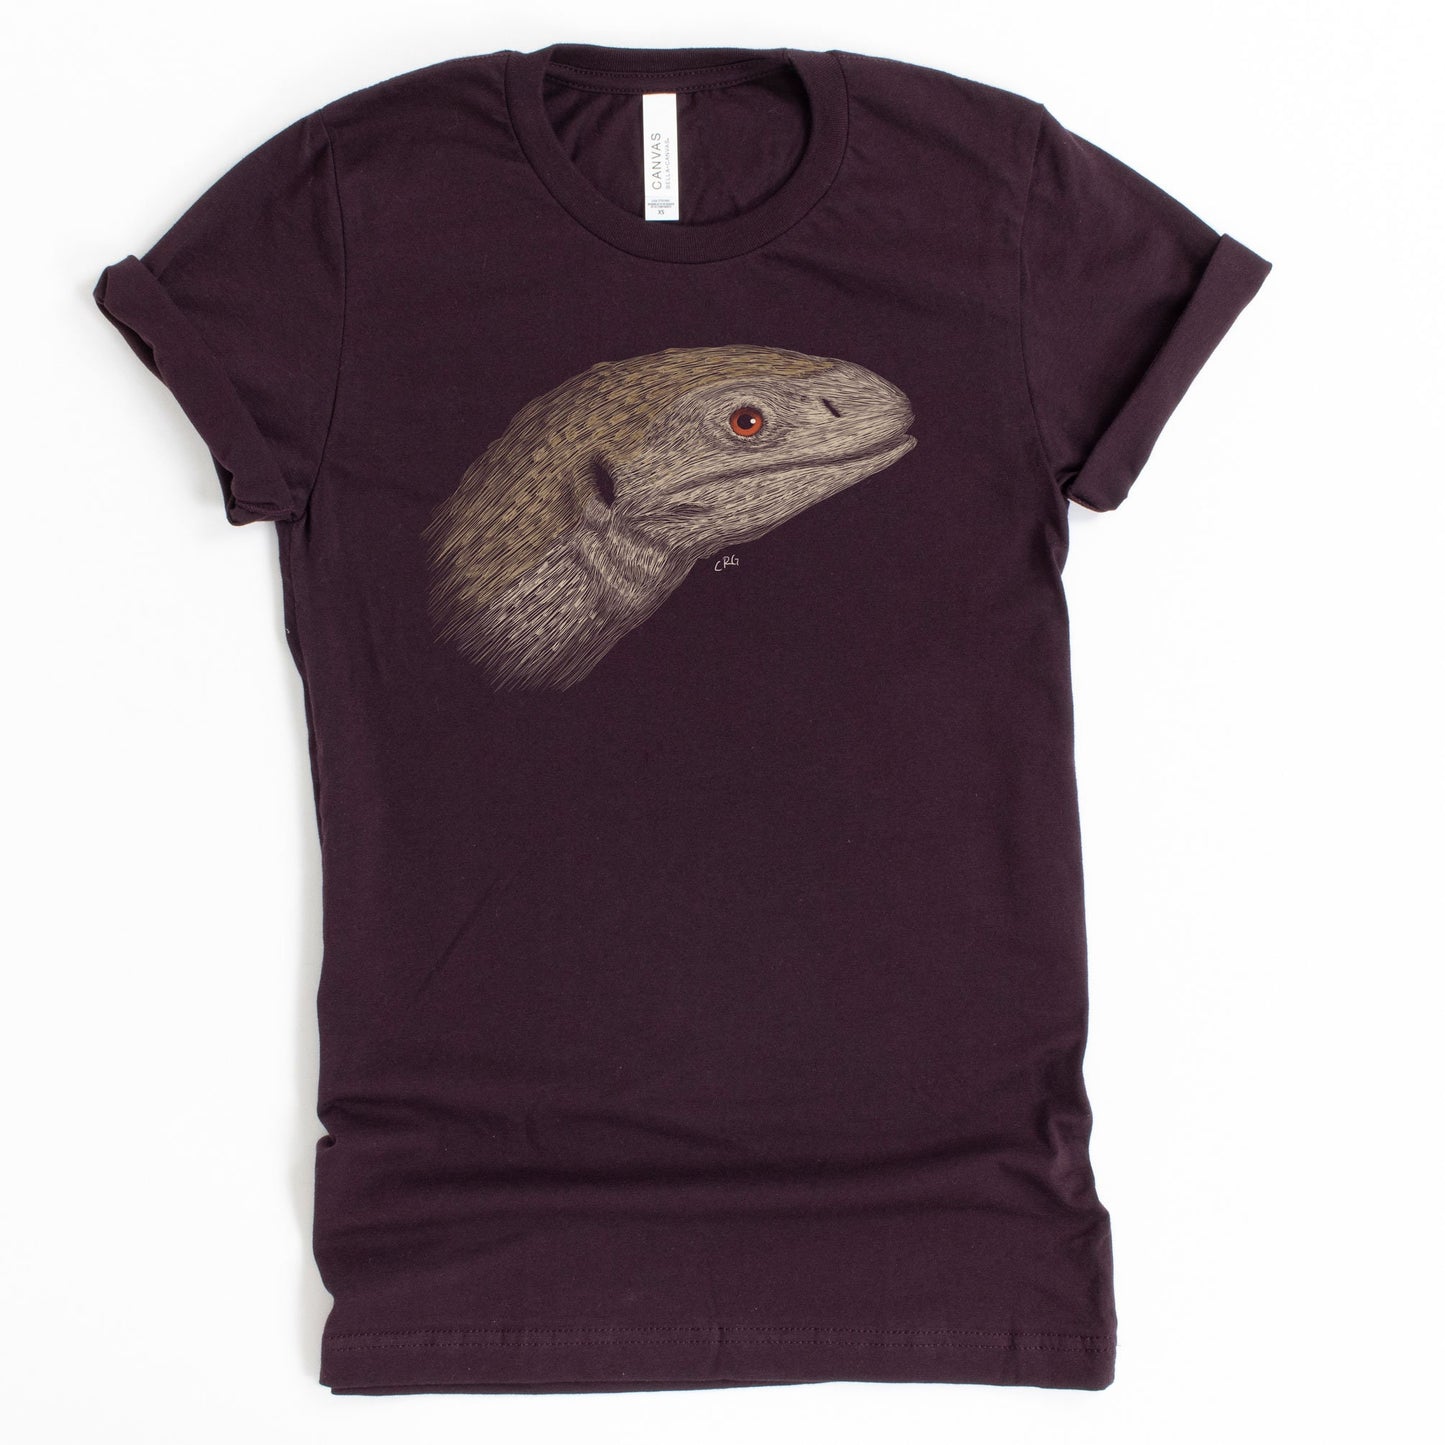 Savannah Monitor Lizard Shirt